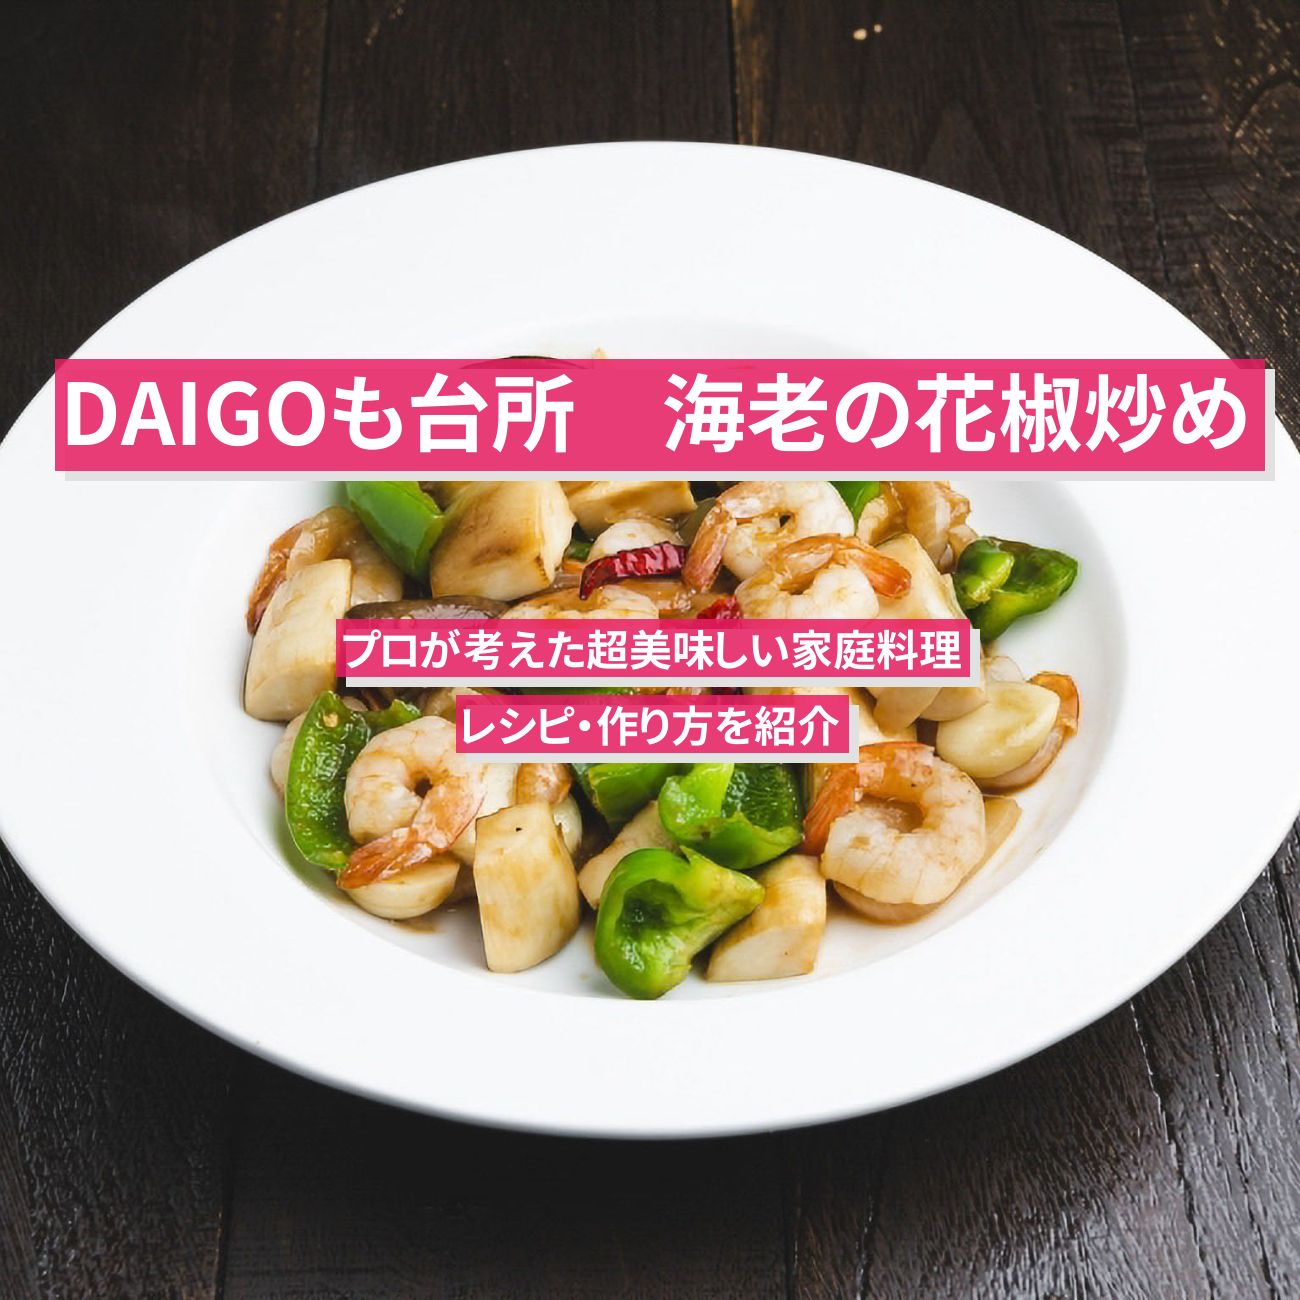 【DAIGOも台所】『海老の花椒炒め』のレシピ・作り方を紹介